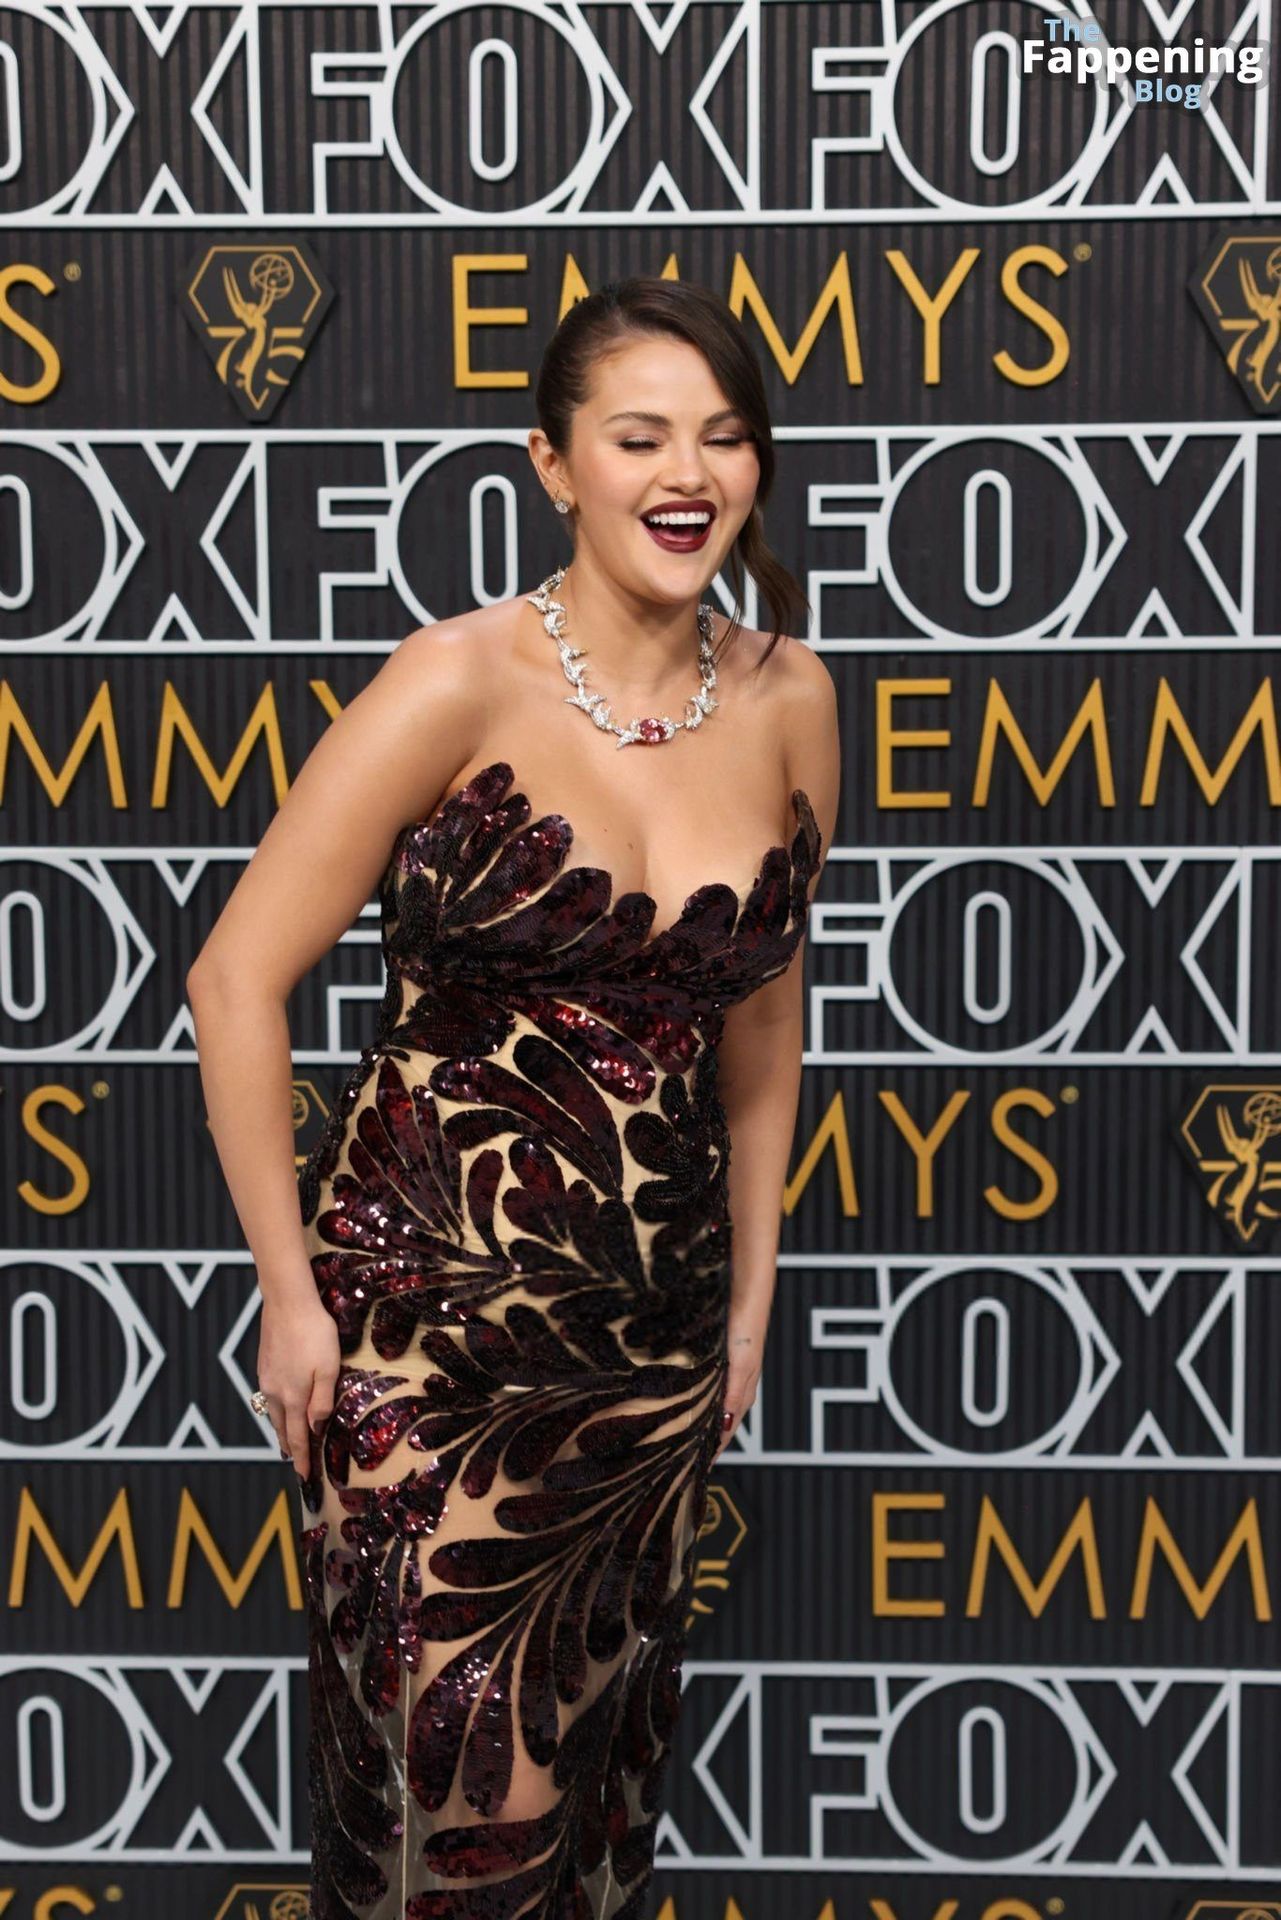 Selena-Gomez-Cleavage-Emmy-Awards-37-thefappeningblog.com_.jpg